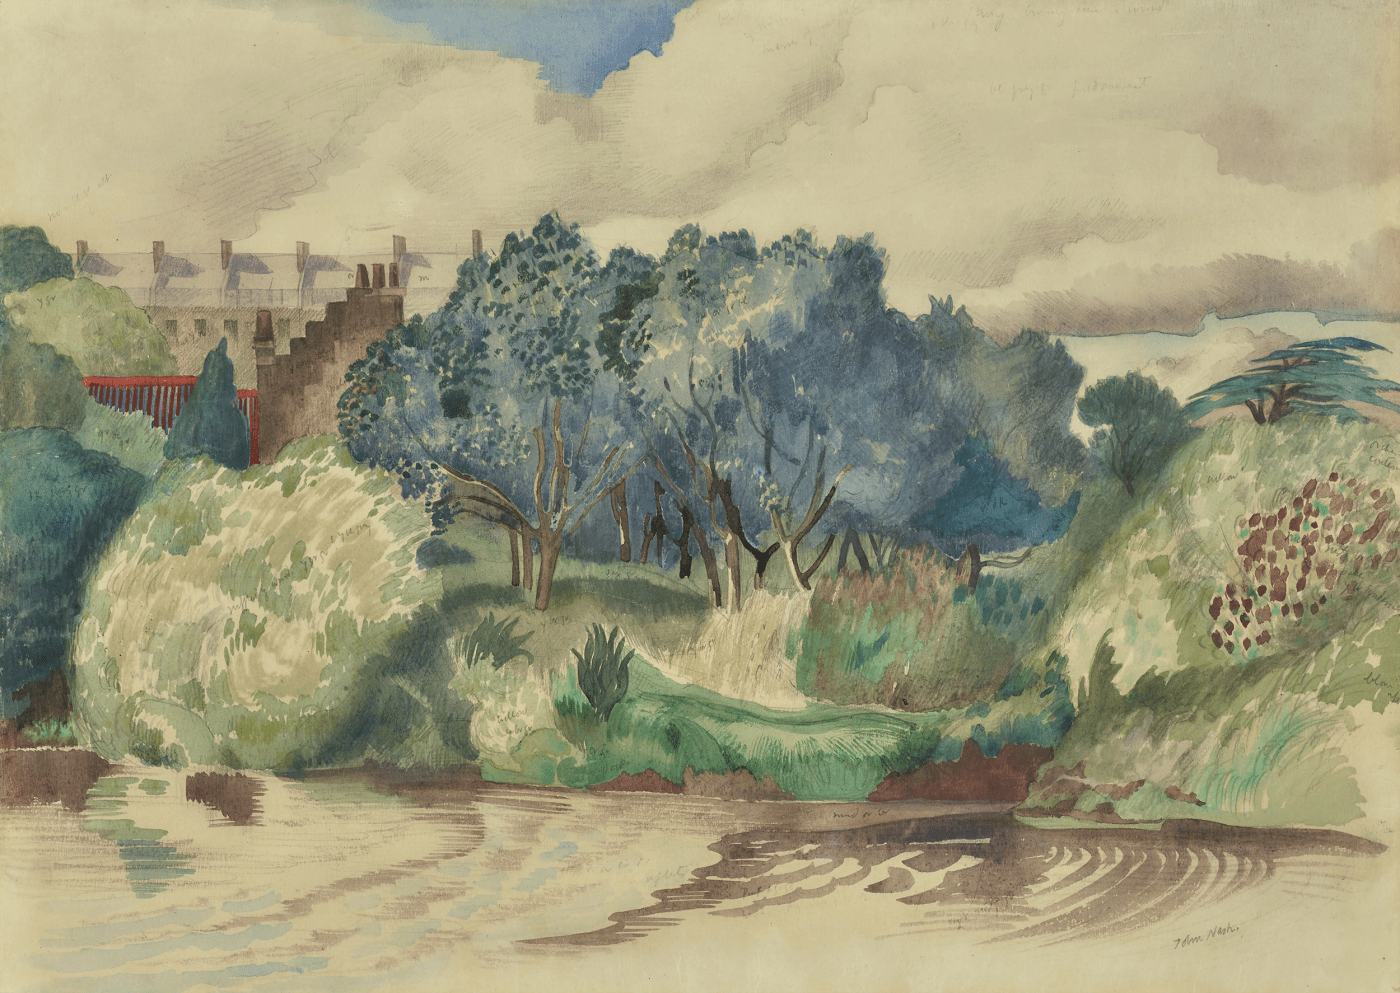 A landscape by British artist John Nash